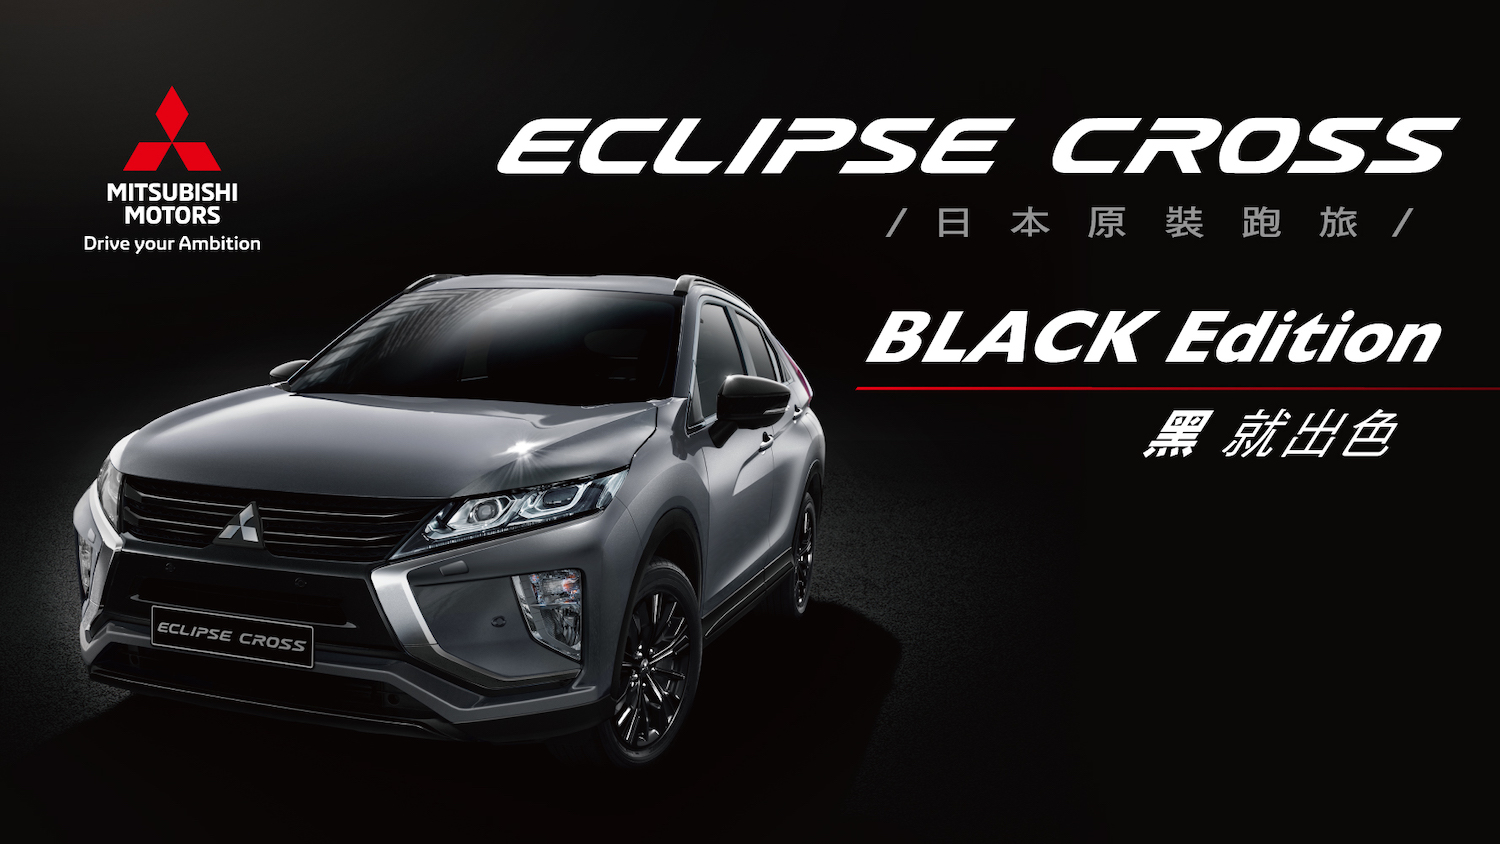 Mitsubishi 挺中華棒球，購車送應援好禮，再推黑耀版 Eclipse Cross